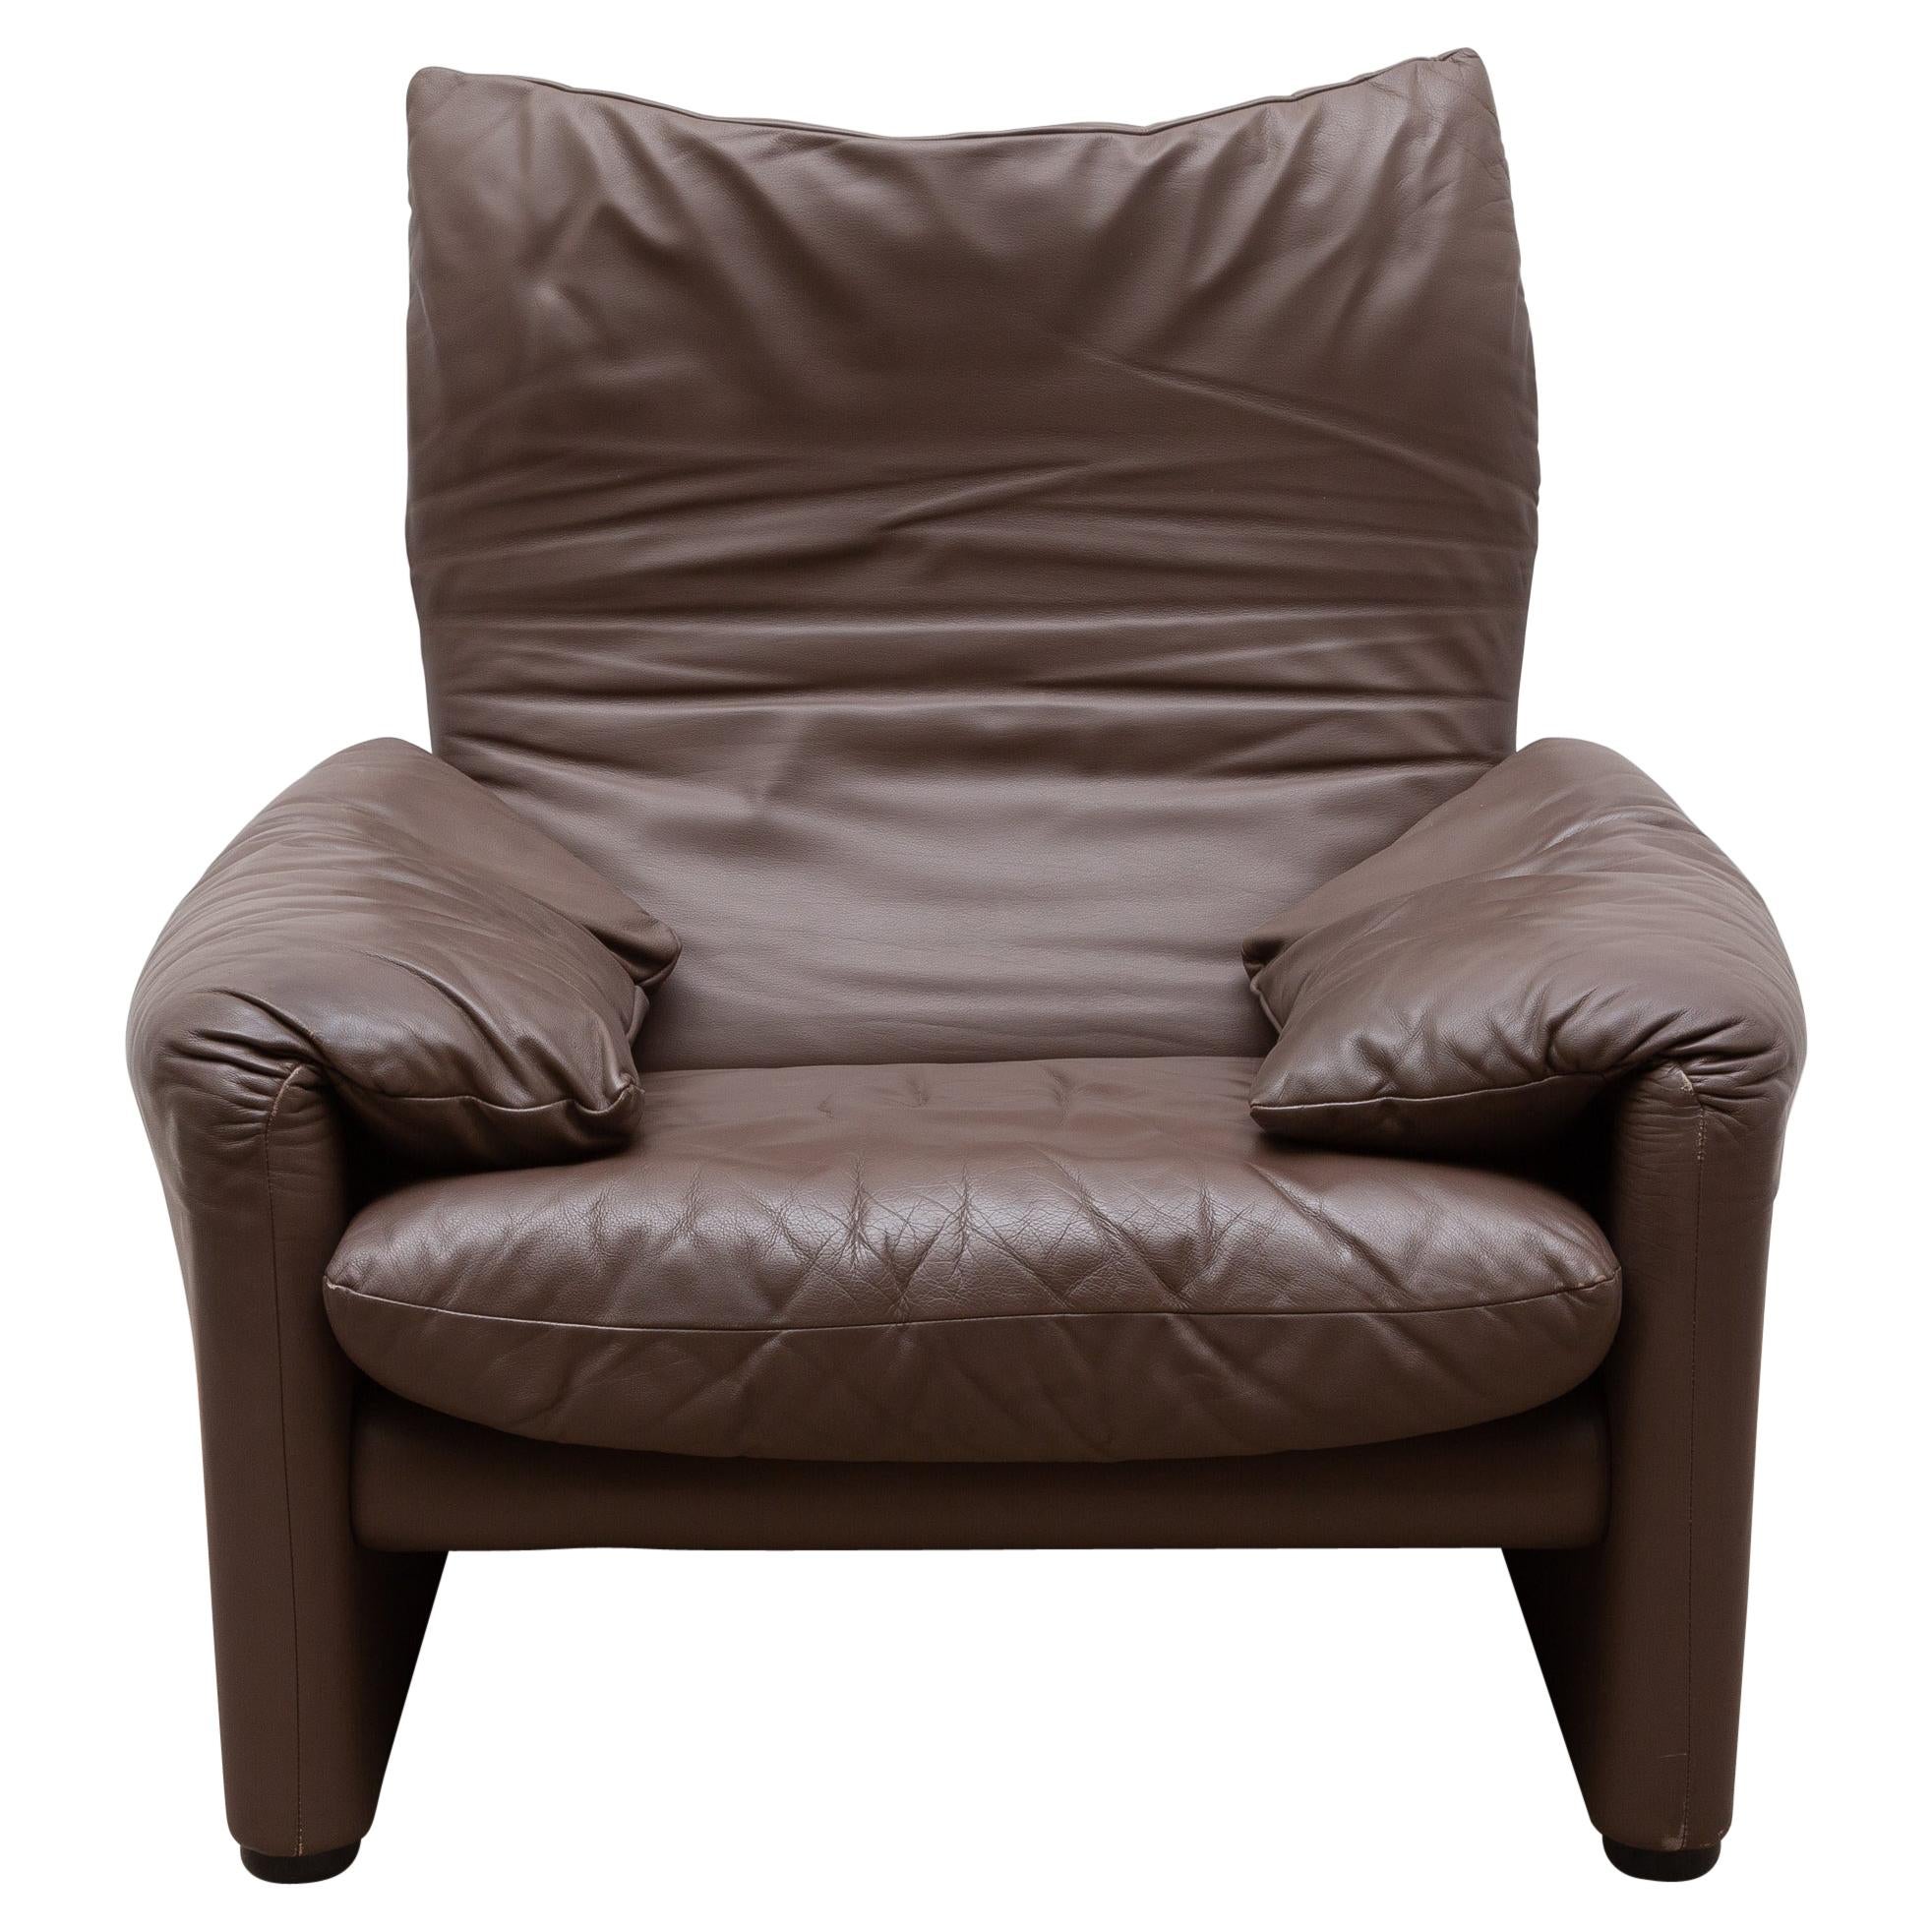 Original "Maralunga" Lounge Chair for Cassina Designed by Vico Magistretti Italy